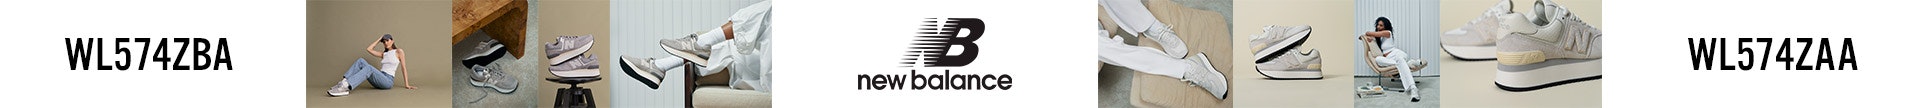 New Balance banner